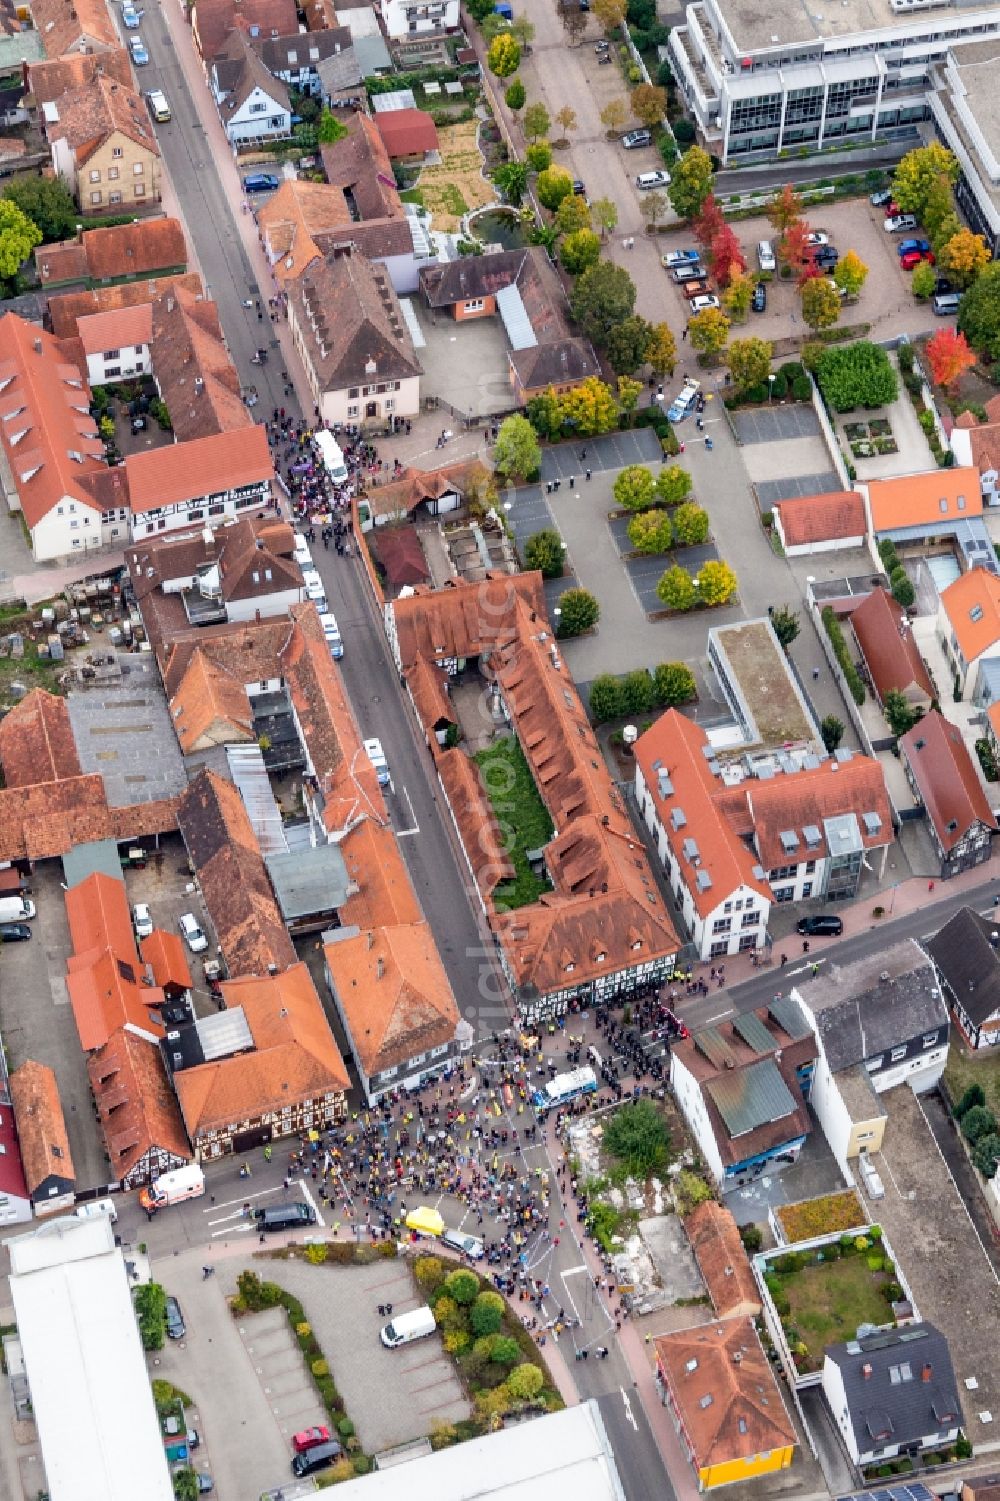 Aerial photograph Kandel - Participant of a political protest demonstration Frauenbuendnis Kandel vs. AntiFa/Wir sind Kandel/Omas gegen rechts in Kandel in the state Rhineland-Palatinate, Germany